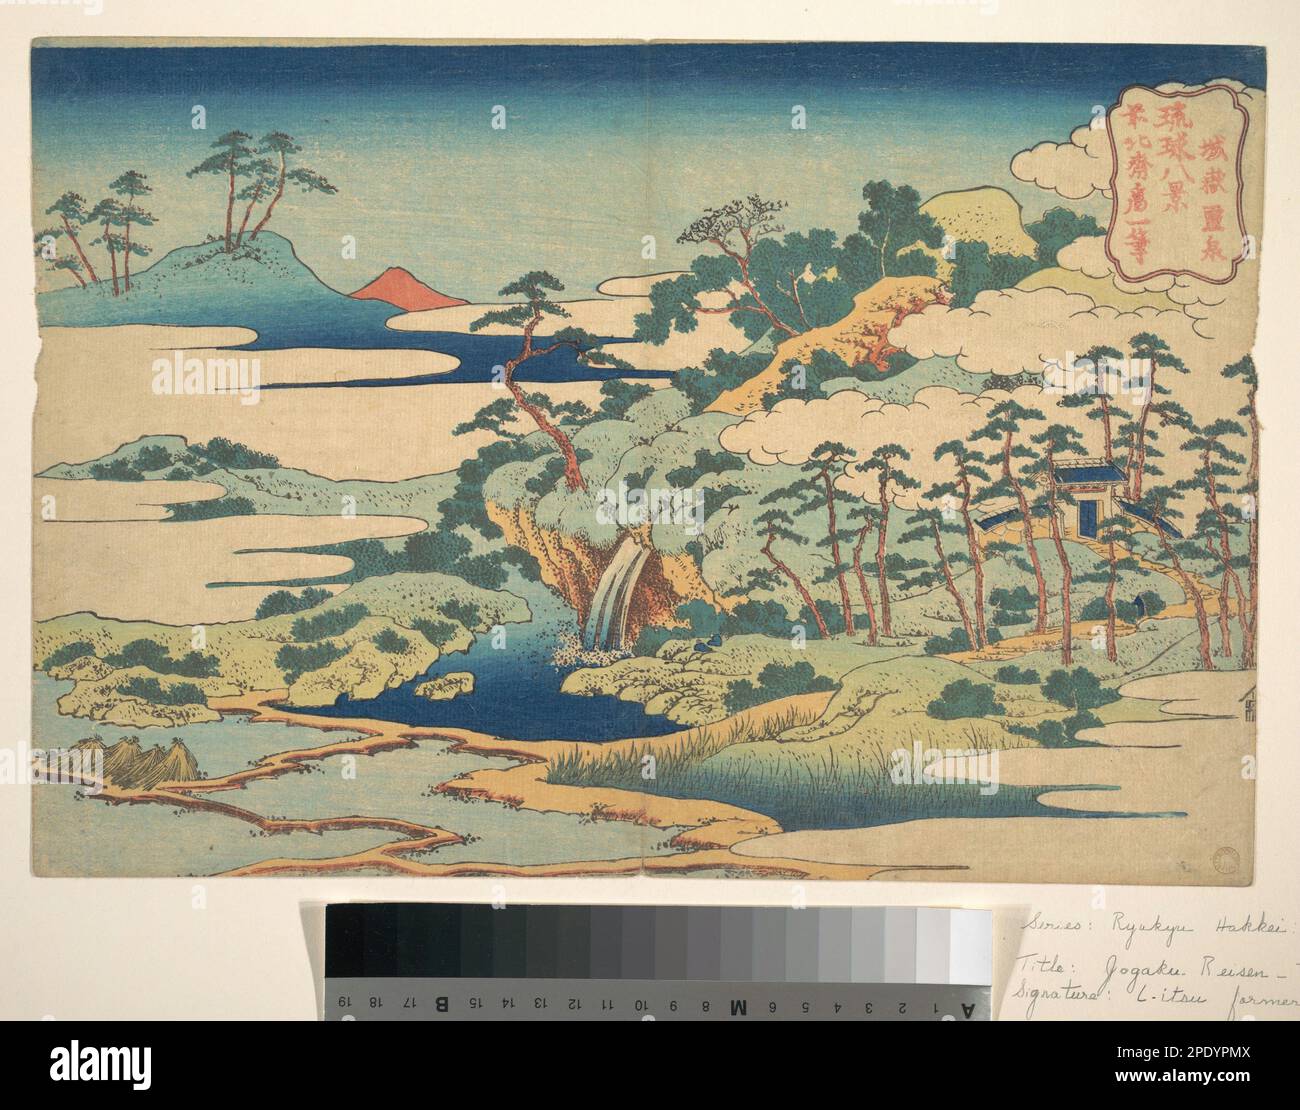 The Sacred Spring at Jōgaku (Jōgaku reisen), from the series Eight Views of the Ryūkyū Islands (Ryūkyū hakkei) 1832 by Katsushika Hokusai Stock Photo